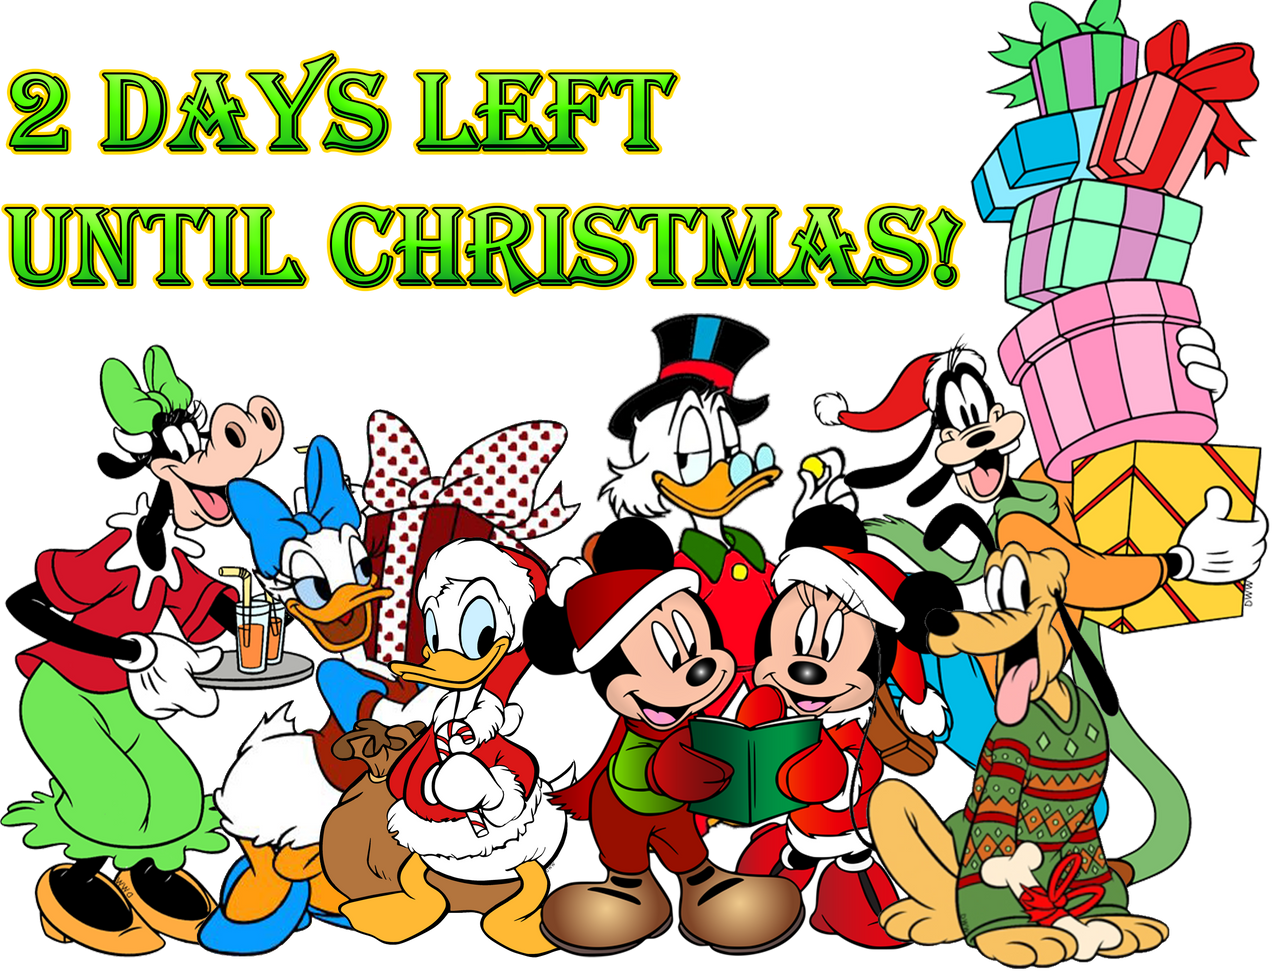 .2 Days until Christmas. by 205tob on DeviantArt